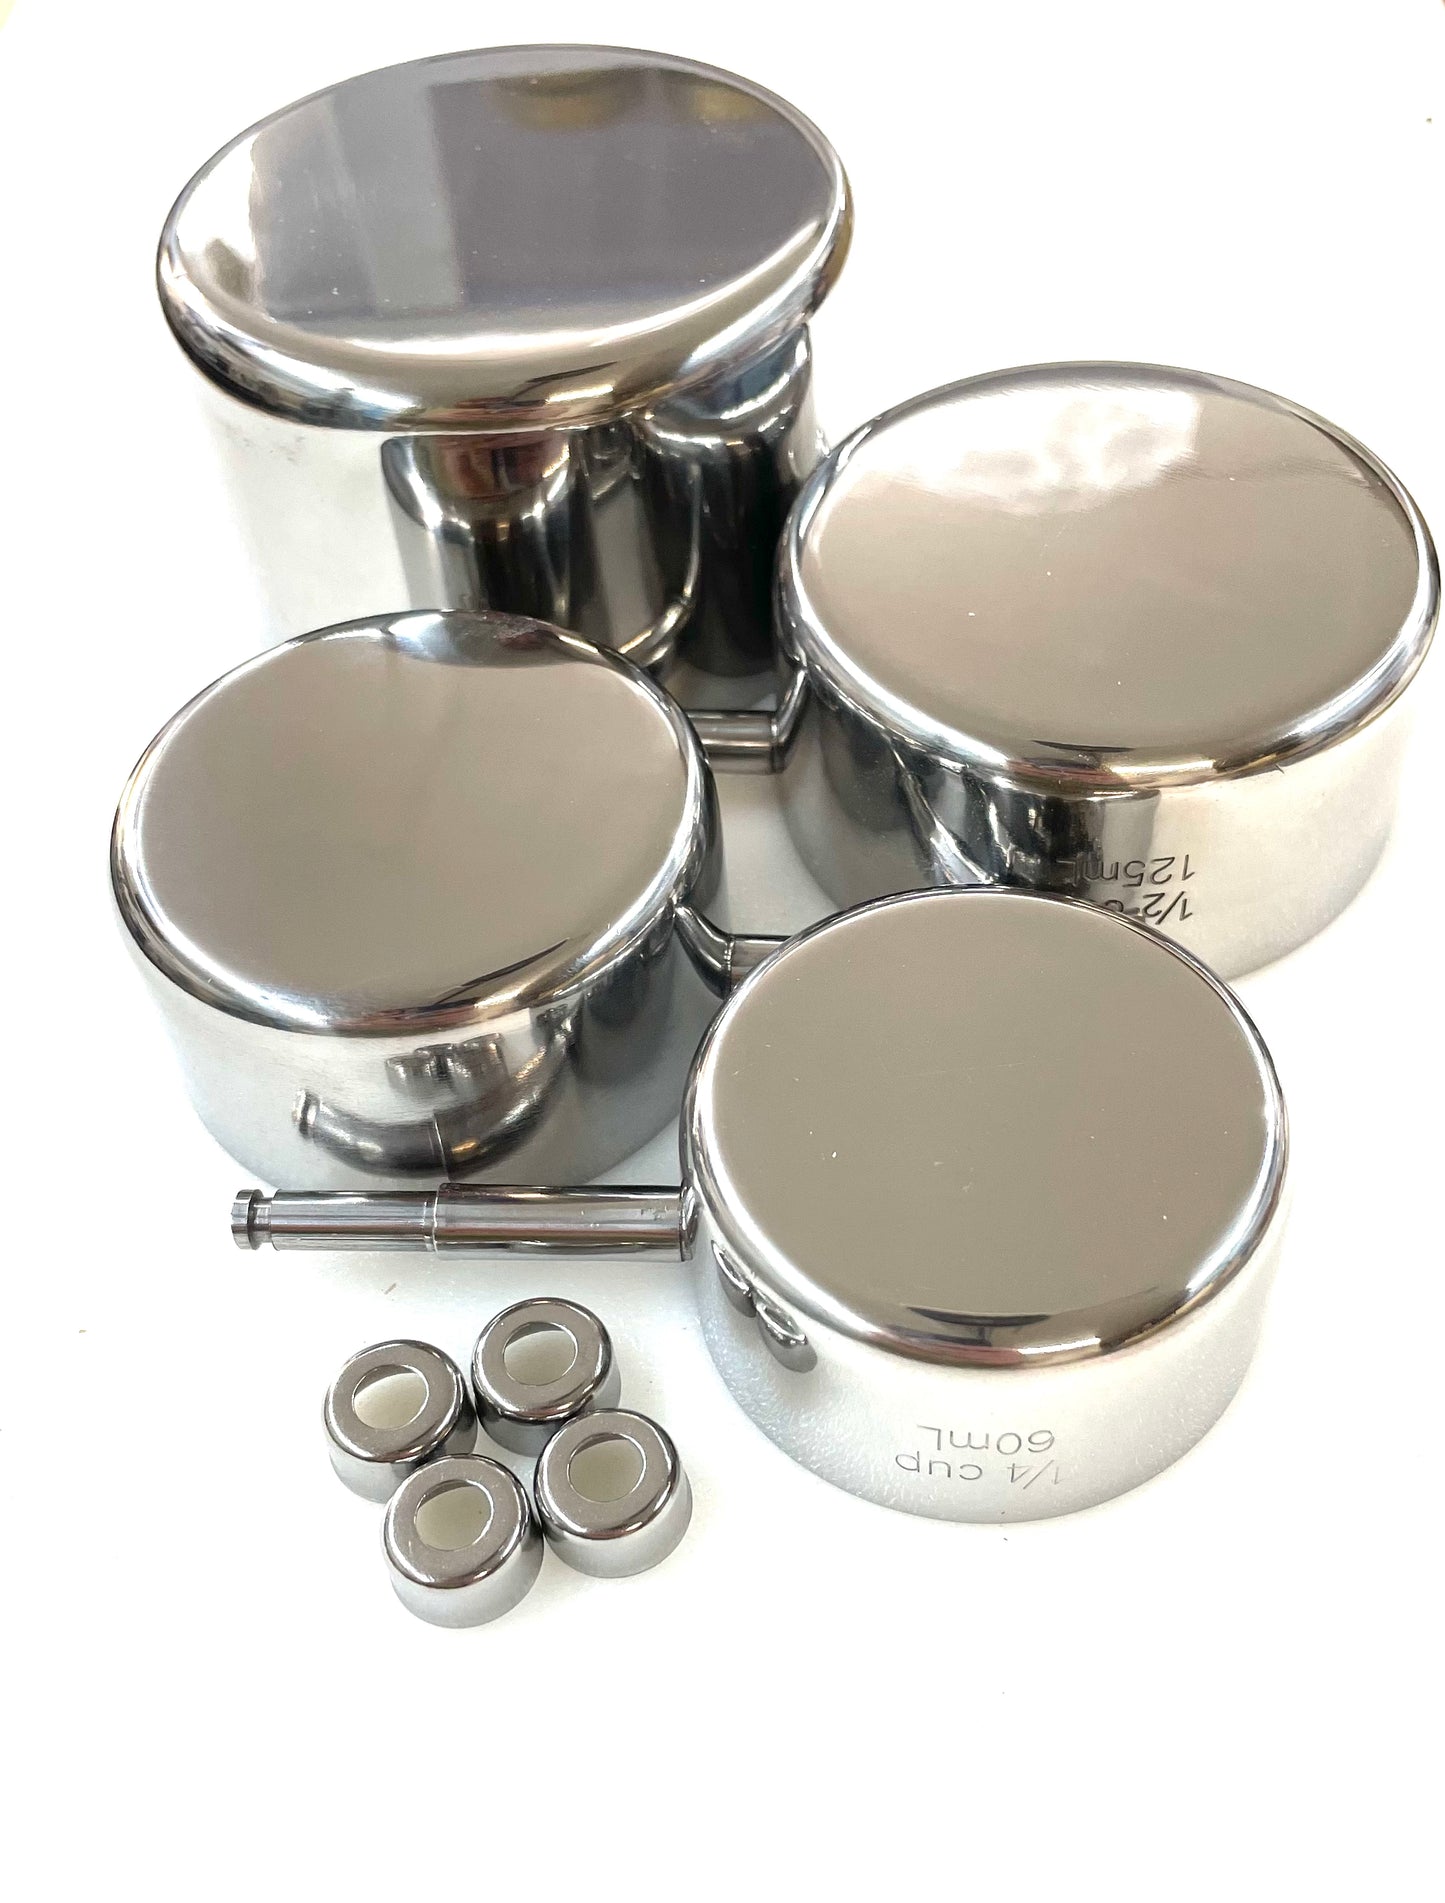 Stainless steel measuring cup turning kit